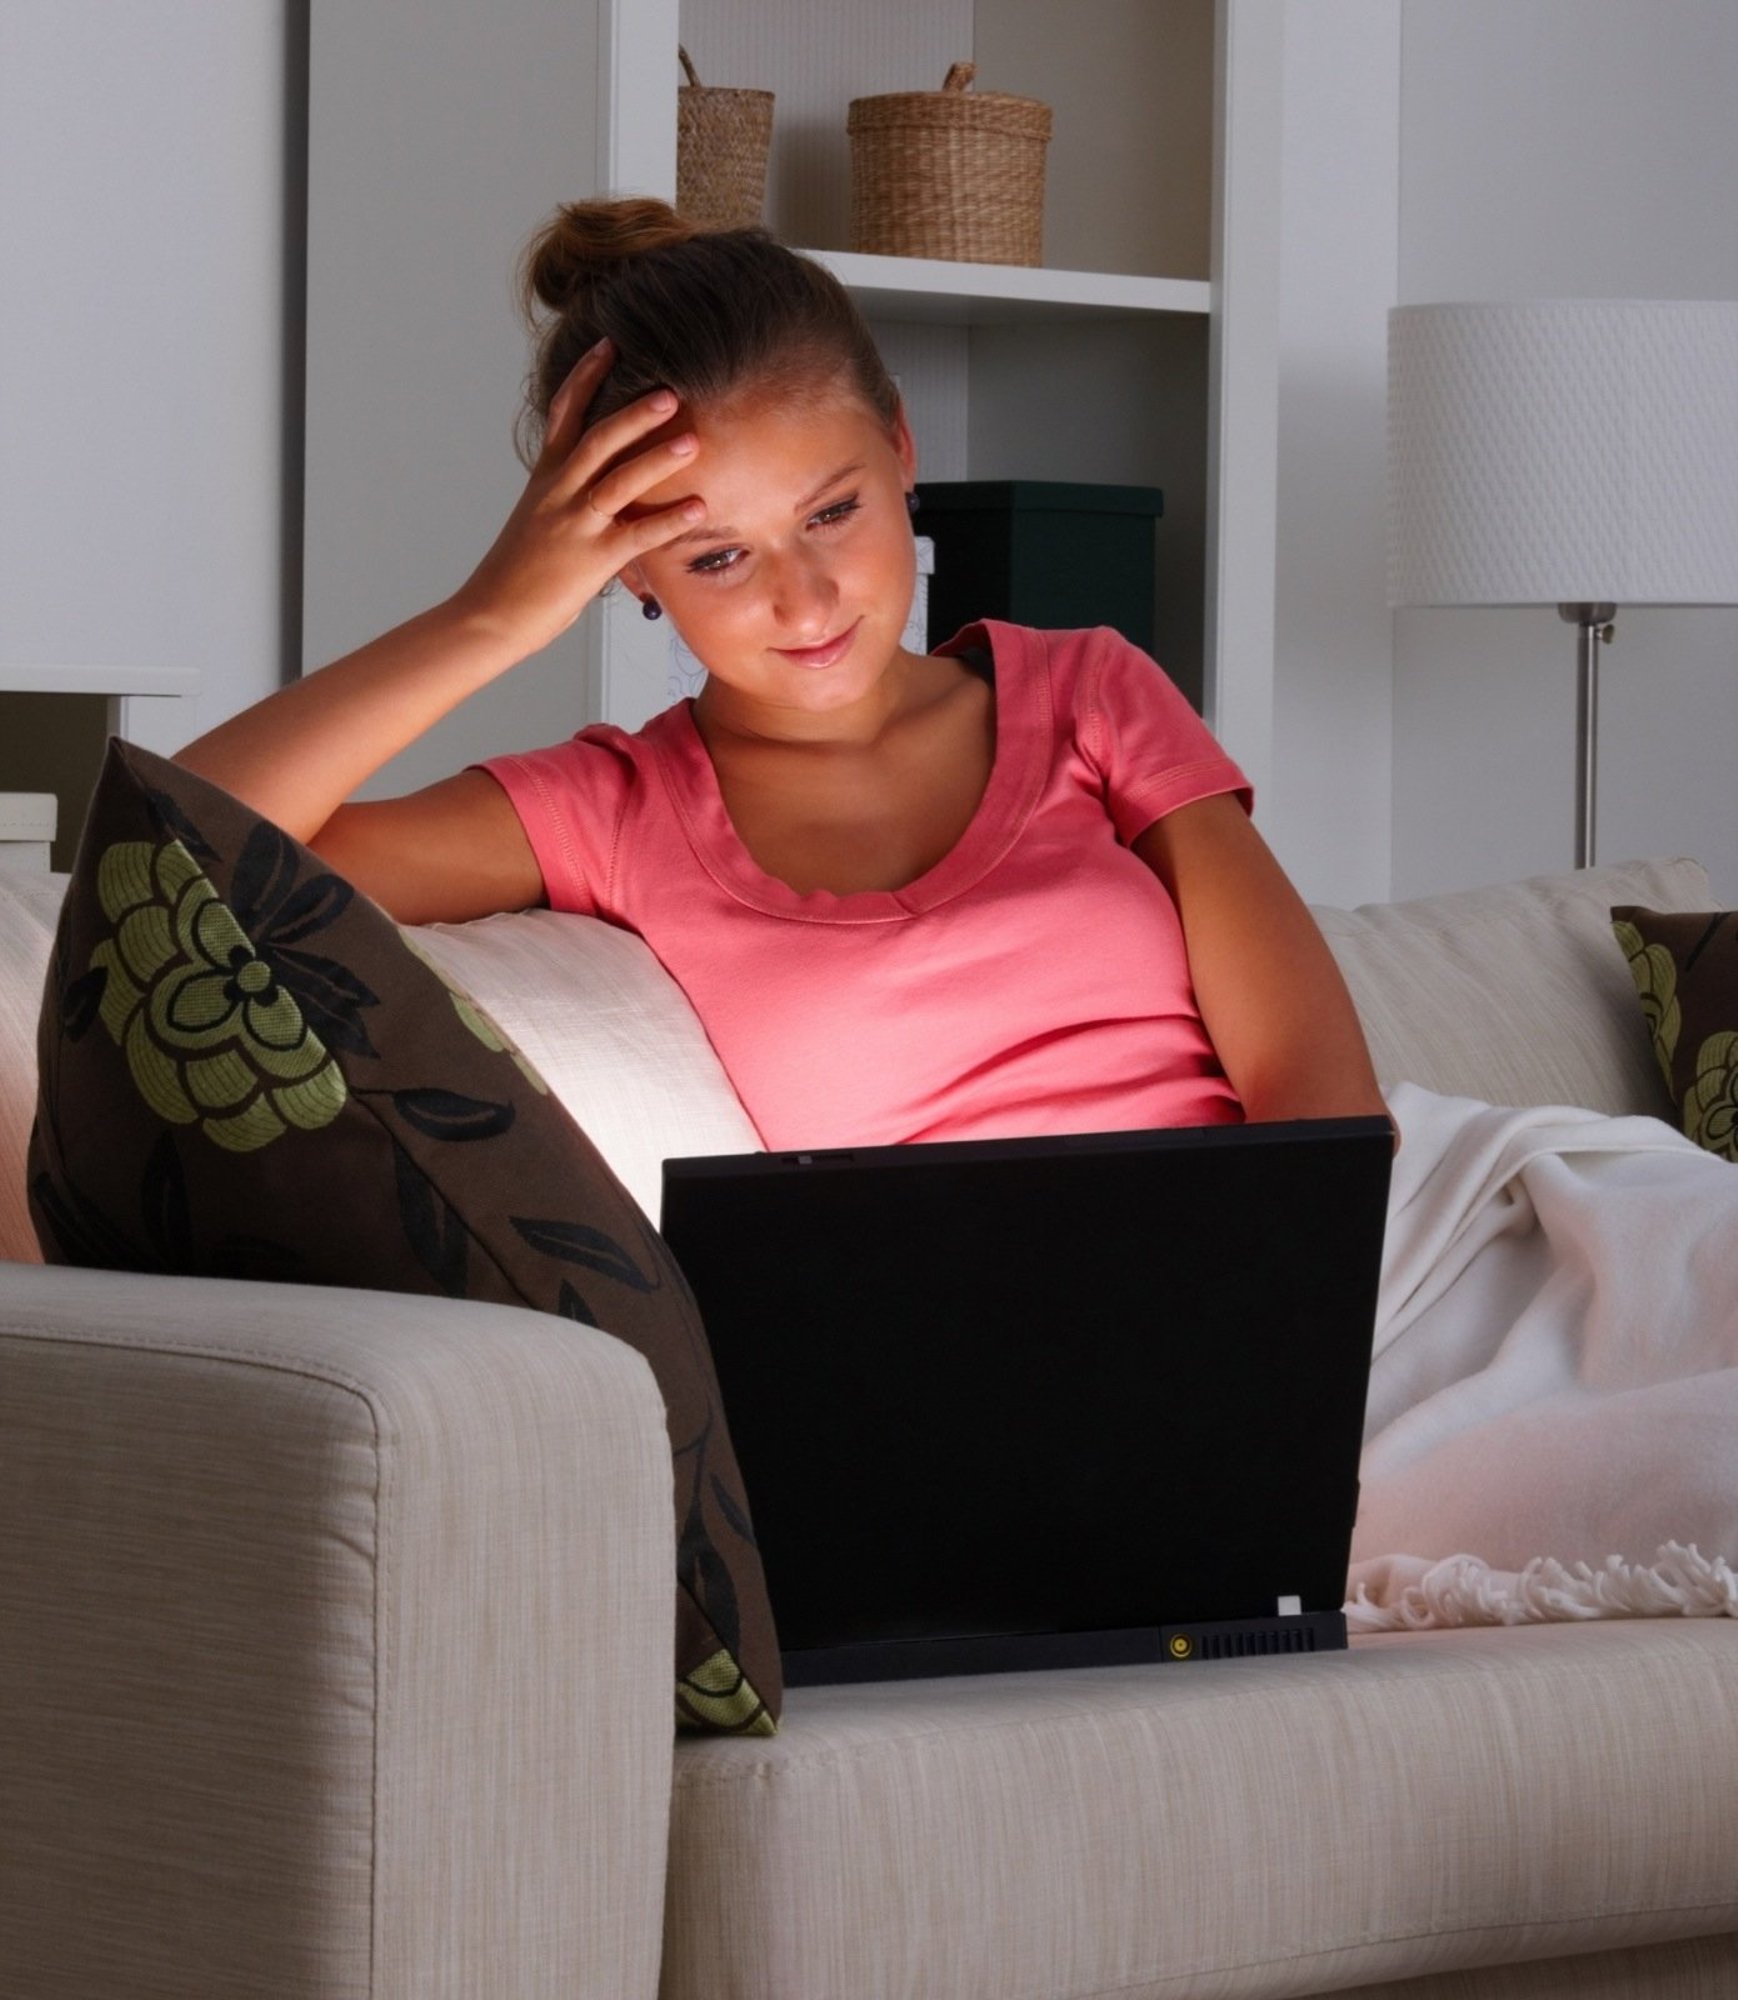 Картинку сидим дома. Девушка за ноутбуком. Девушка сидит за компьютером. Подросток и компьютер. Подросток с ноутбуком.